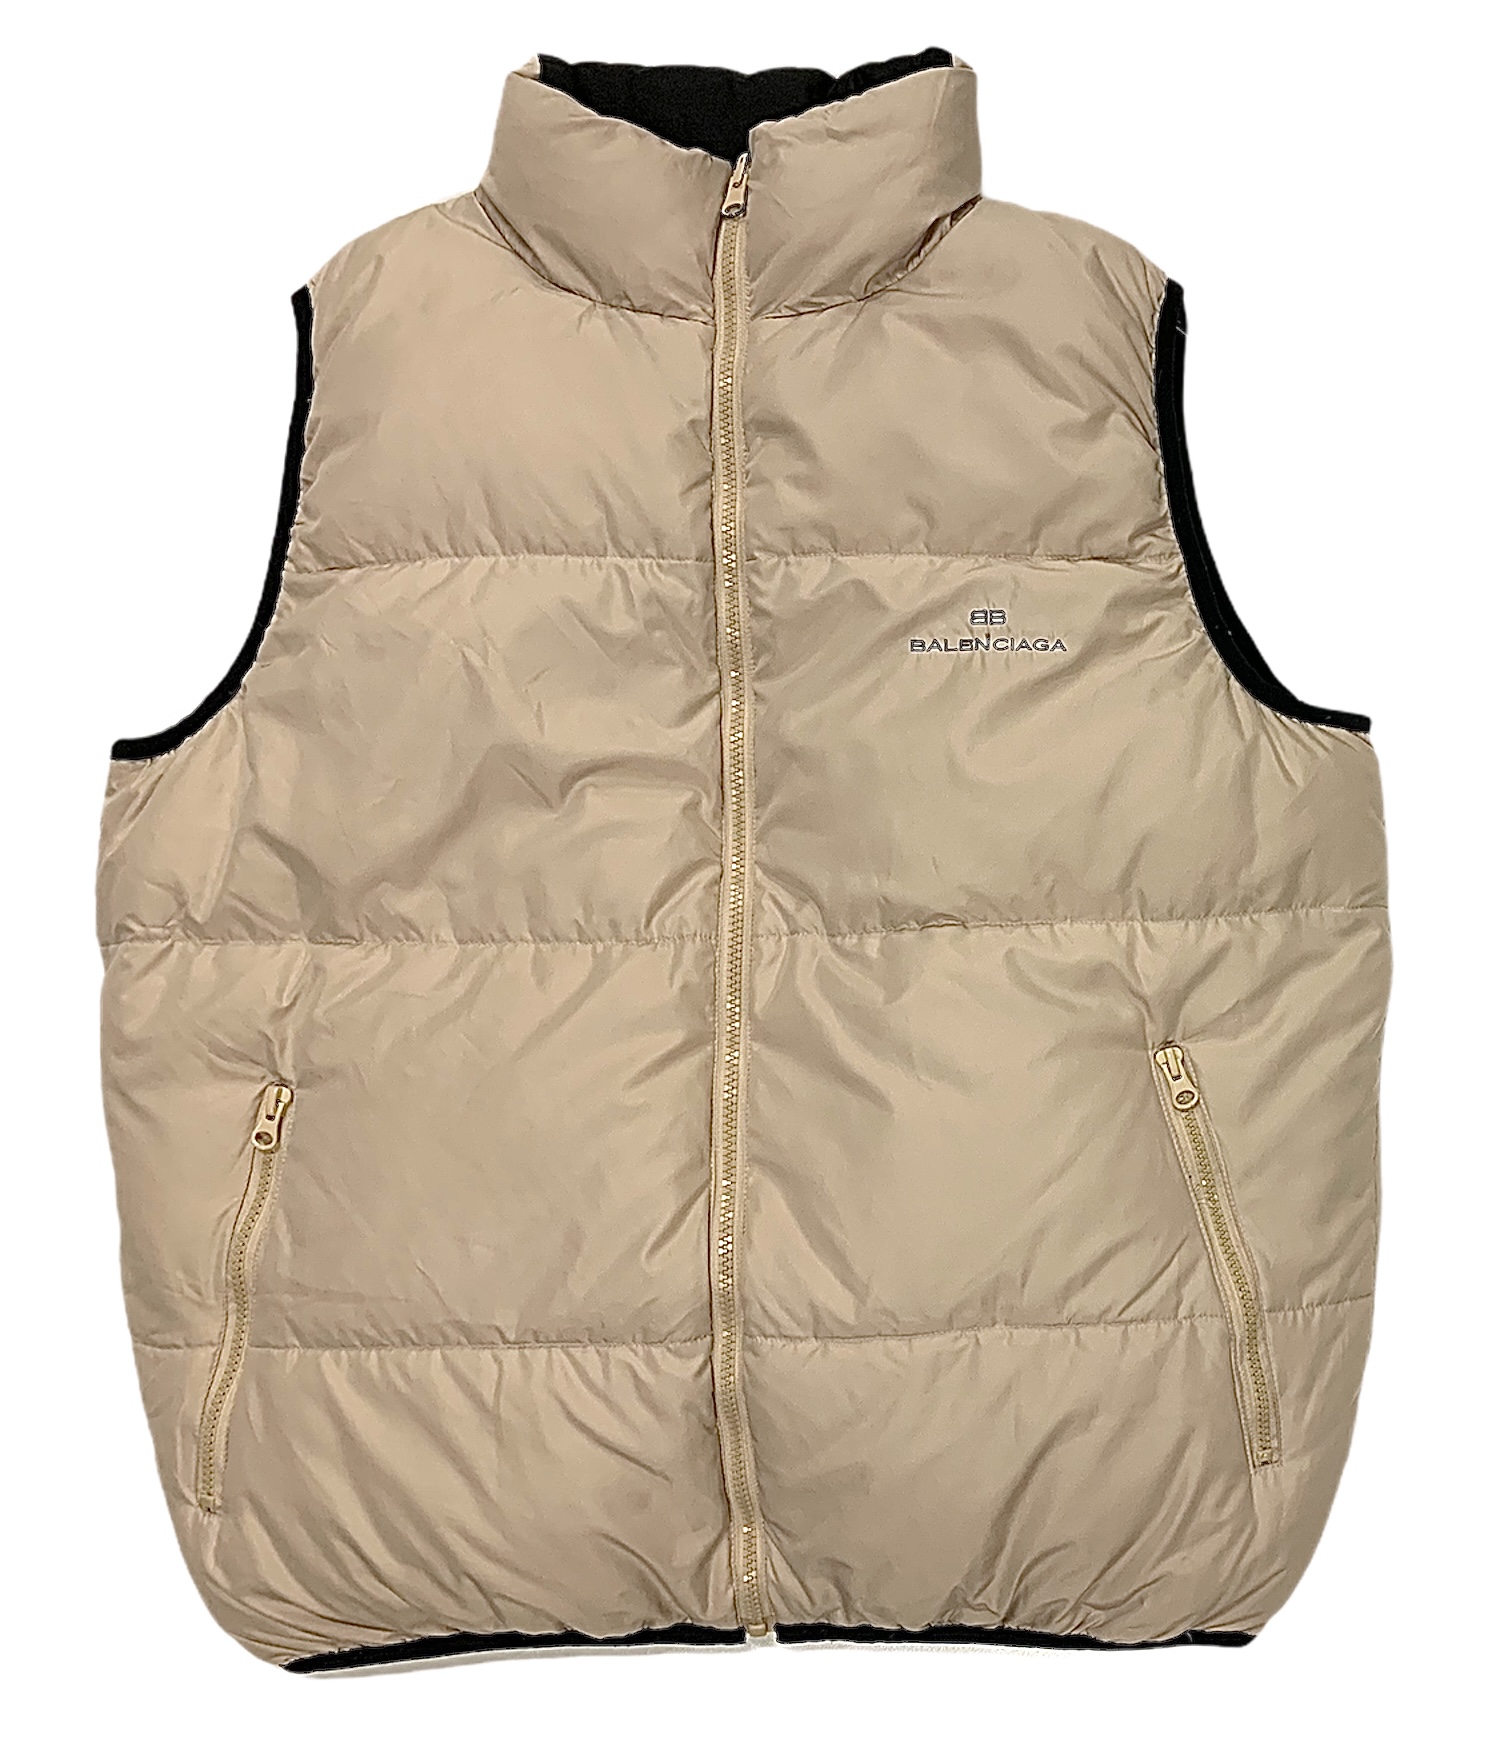 Balenciaga reversible puffer vest